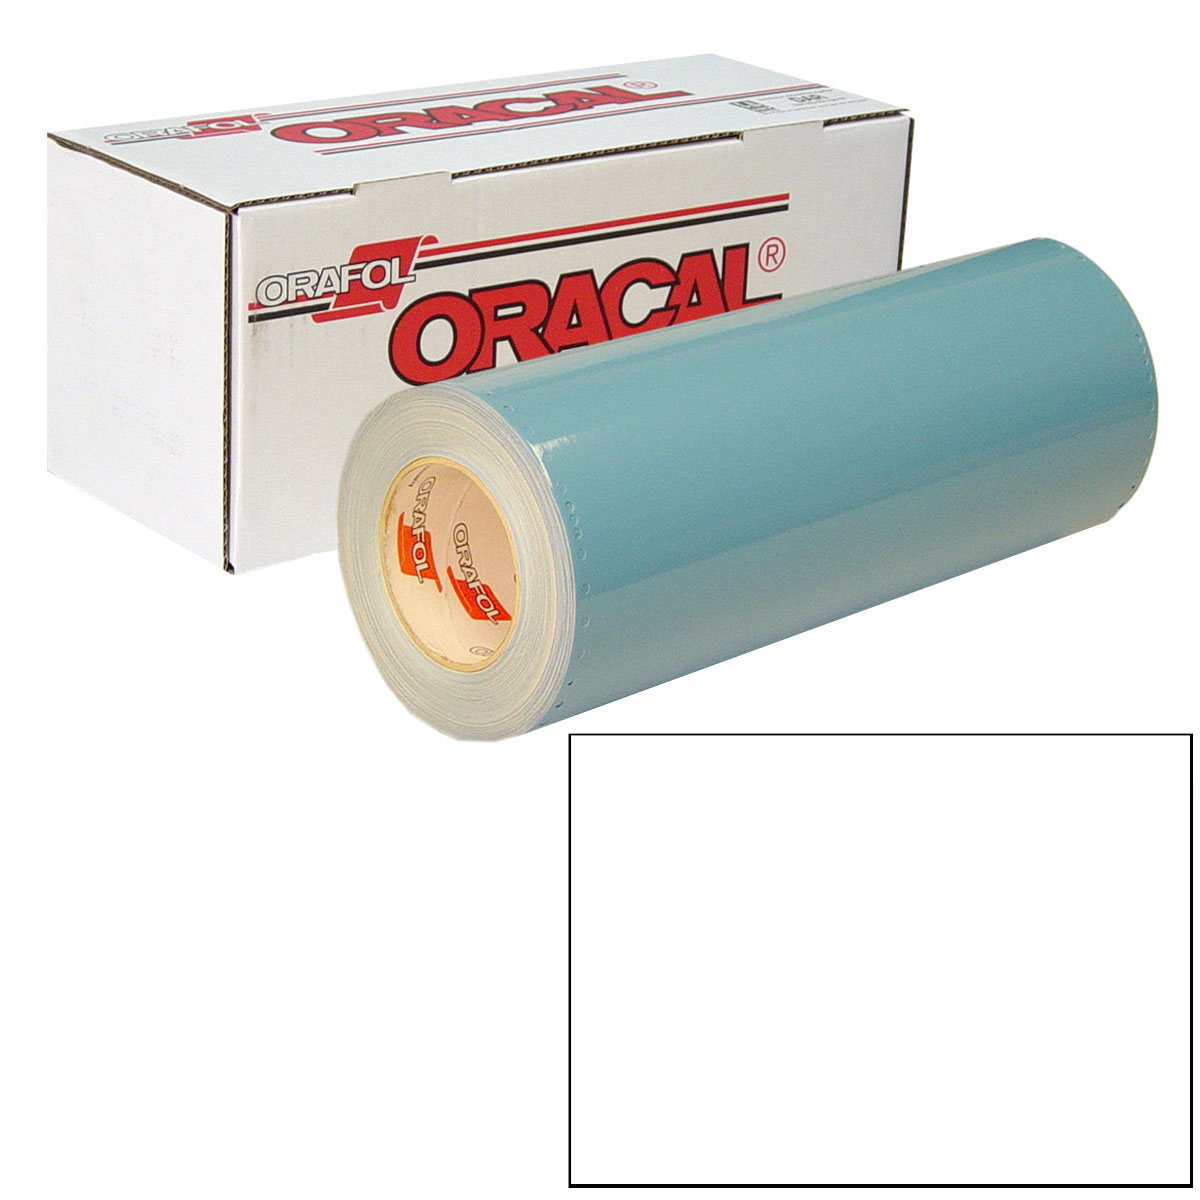 Oracal 751 & 751RA 48-inch